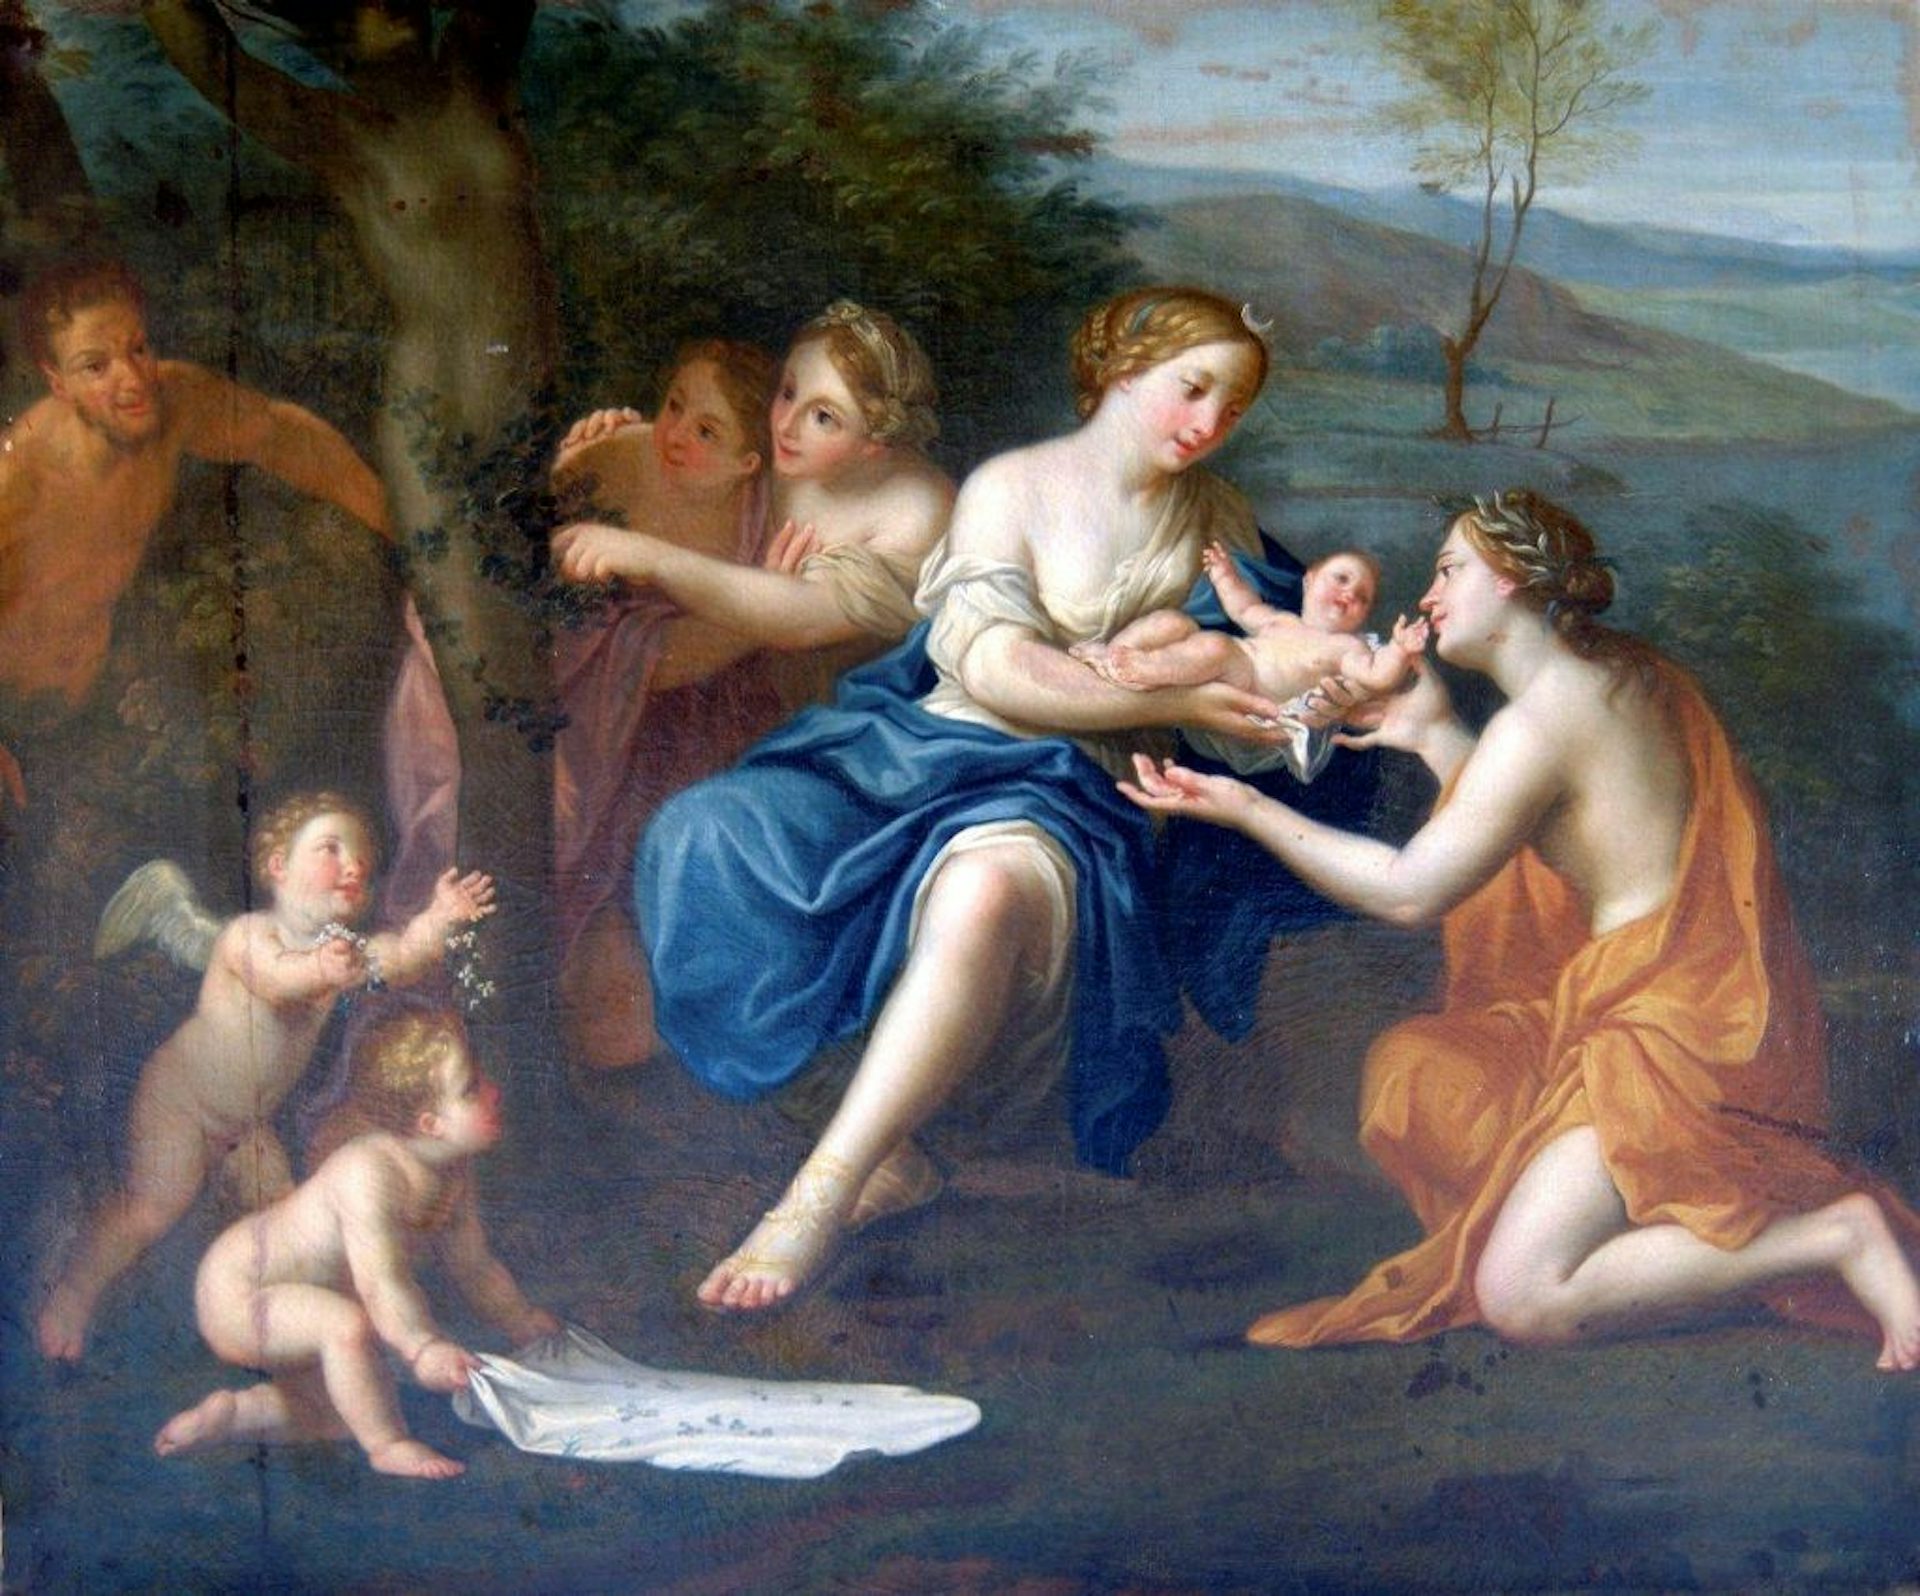 Birth of Adonis by Marco Antonio Franceschini